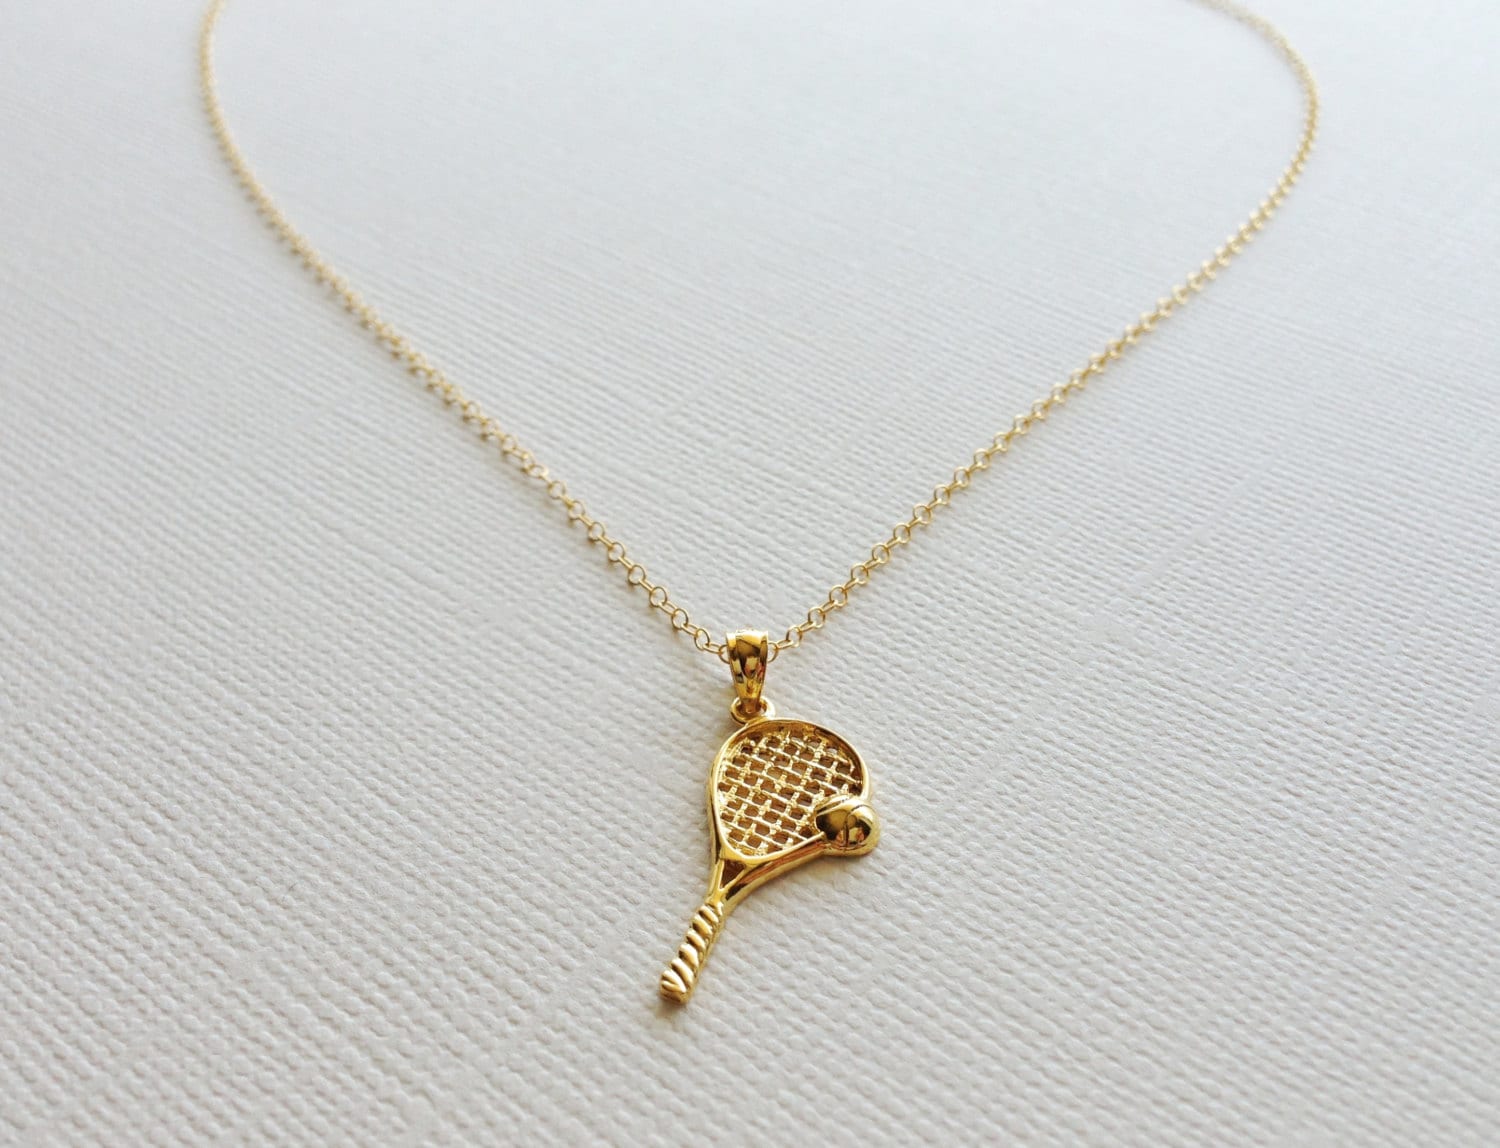 Sportybella Tennis Racket Pendant Necklace 18K Gold Tennis Jewelry Gifts  for Women Girls Tennis Lovers, Sideways Tennis Racket Charm